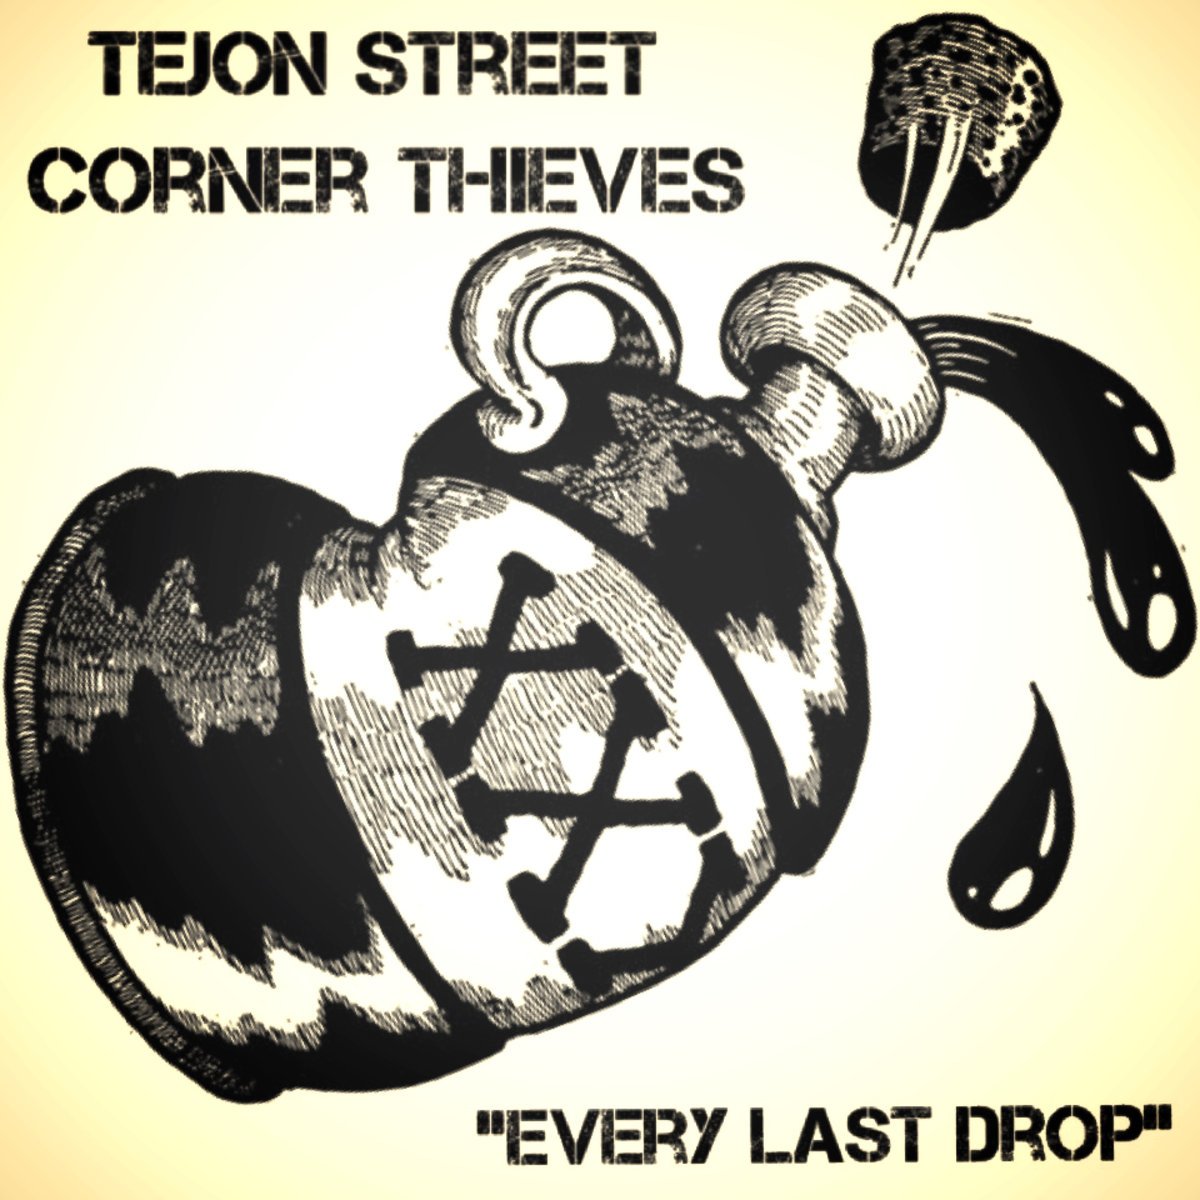 Street corner thieves